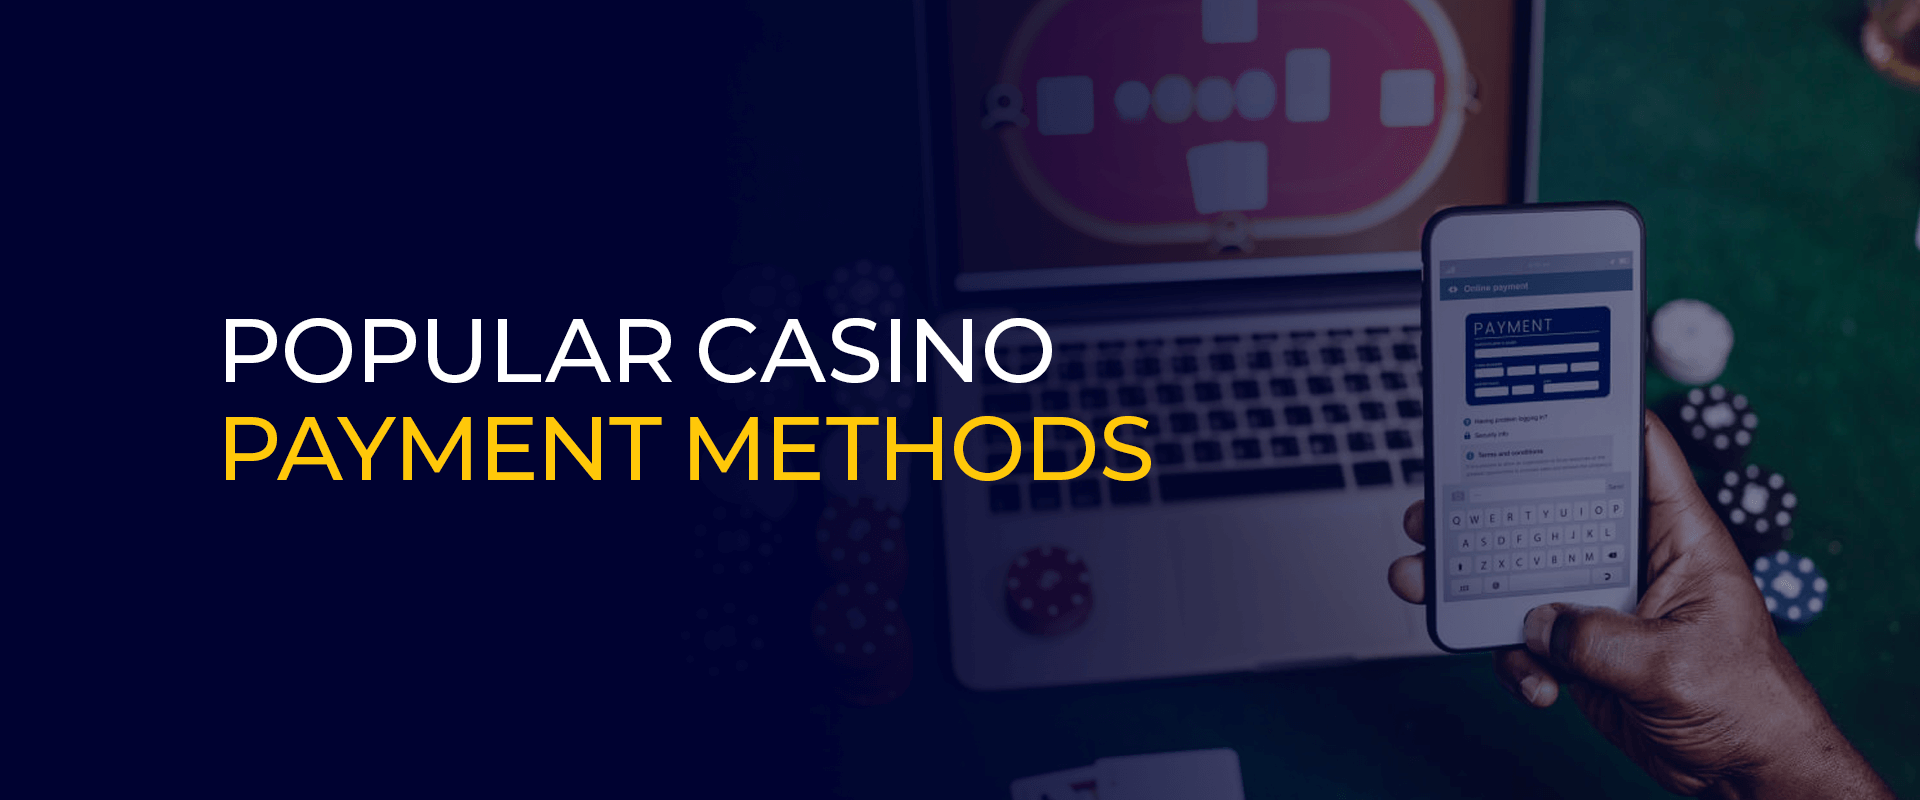 Popular Casino Payment Methods